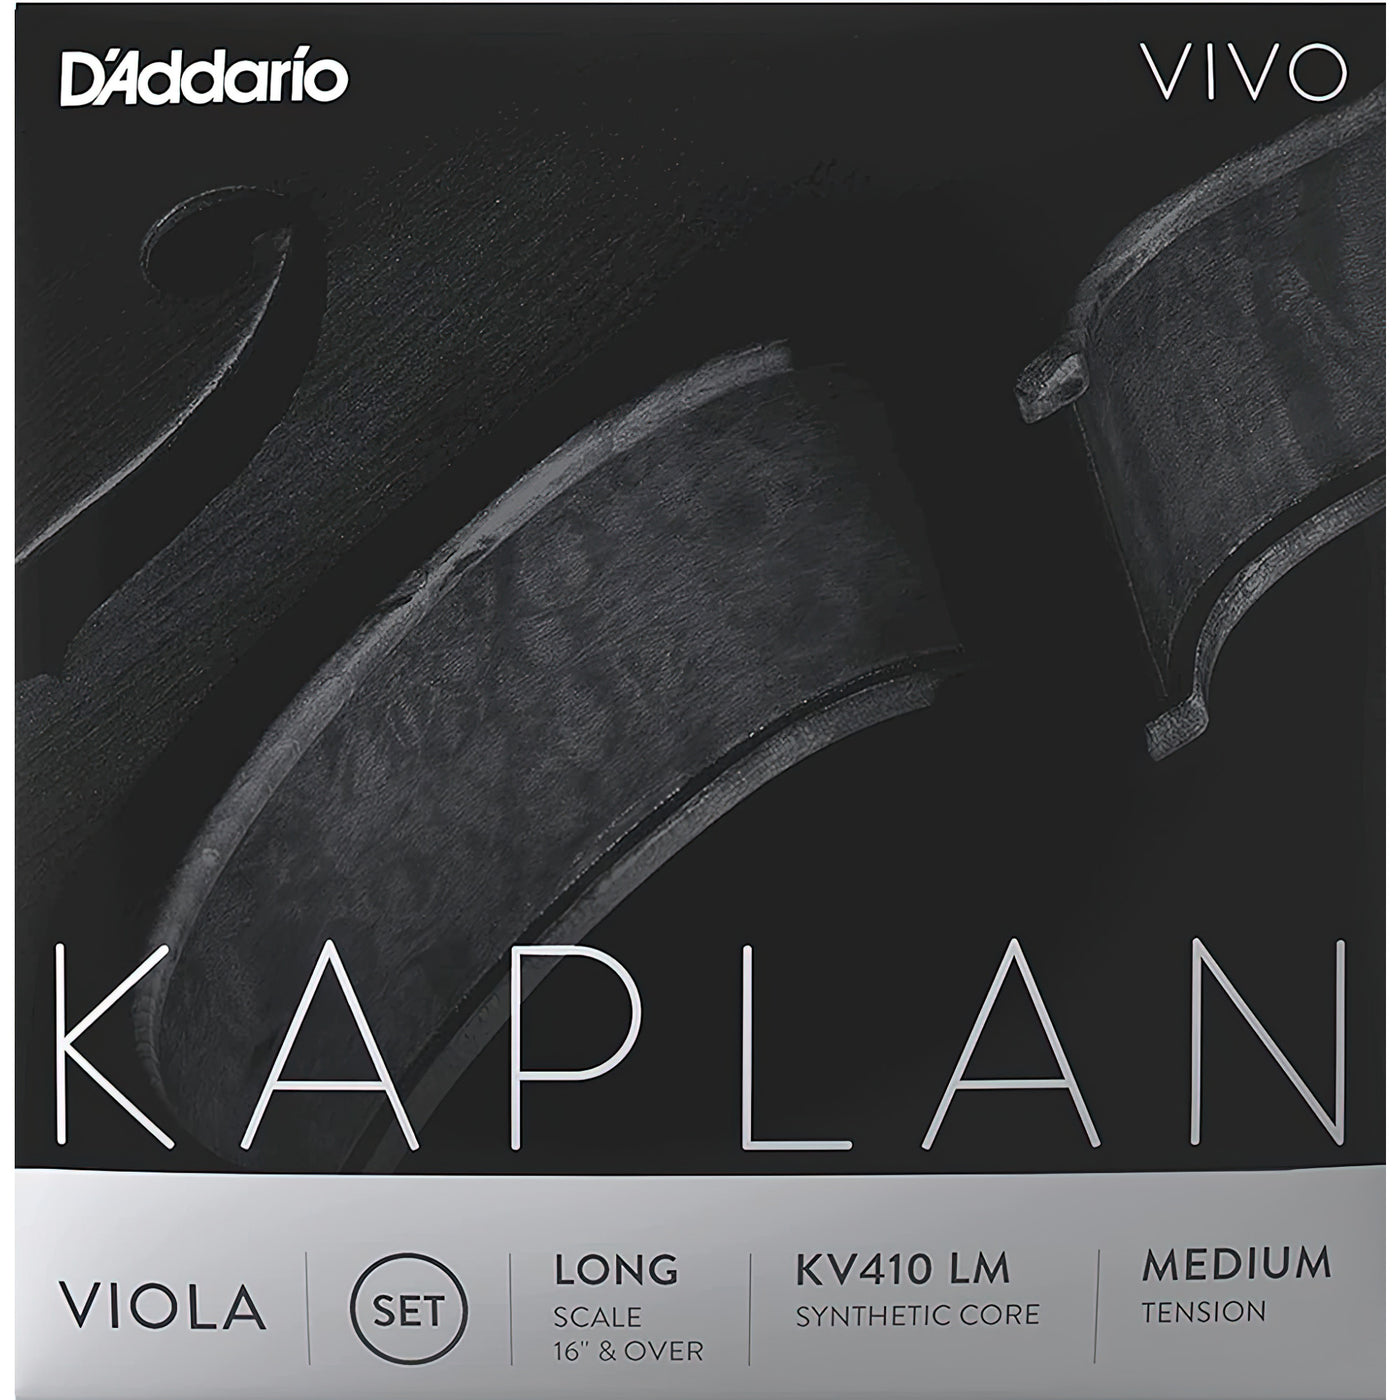 D'Addario KV410 Kaplan Vivo Viola String Set, Long Size (KV410 LM)